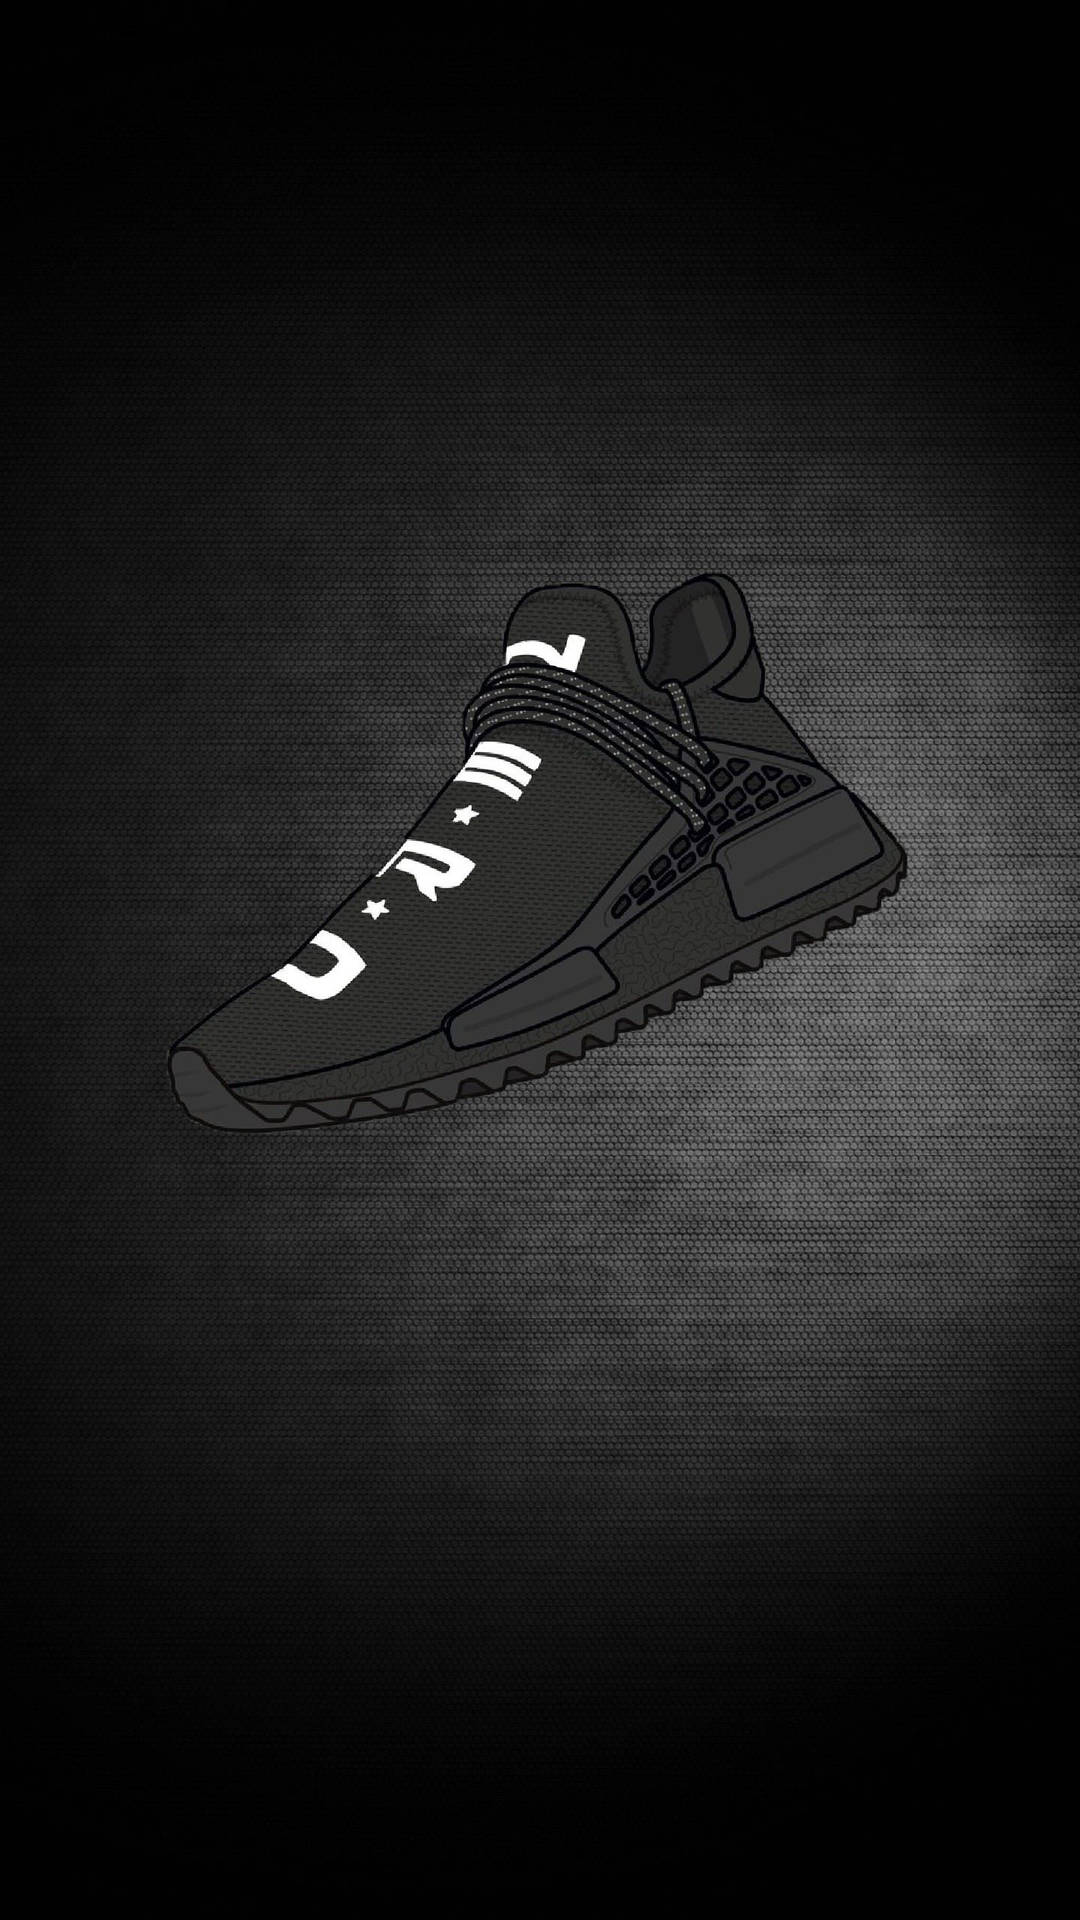 Black Adidas Nmd Human Race Cartoon Sneaker Digital Illustration Wallpaper